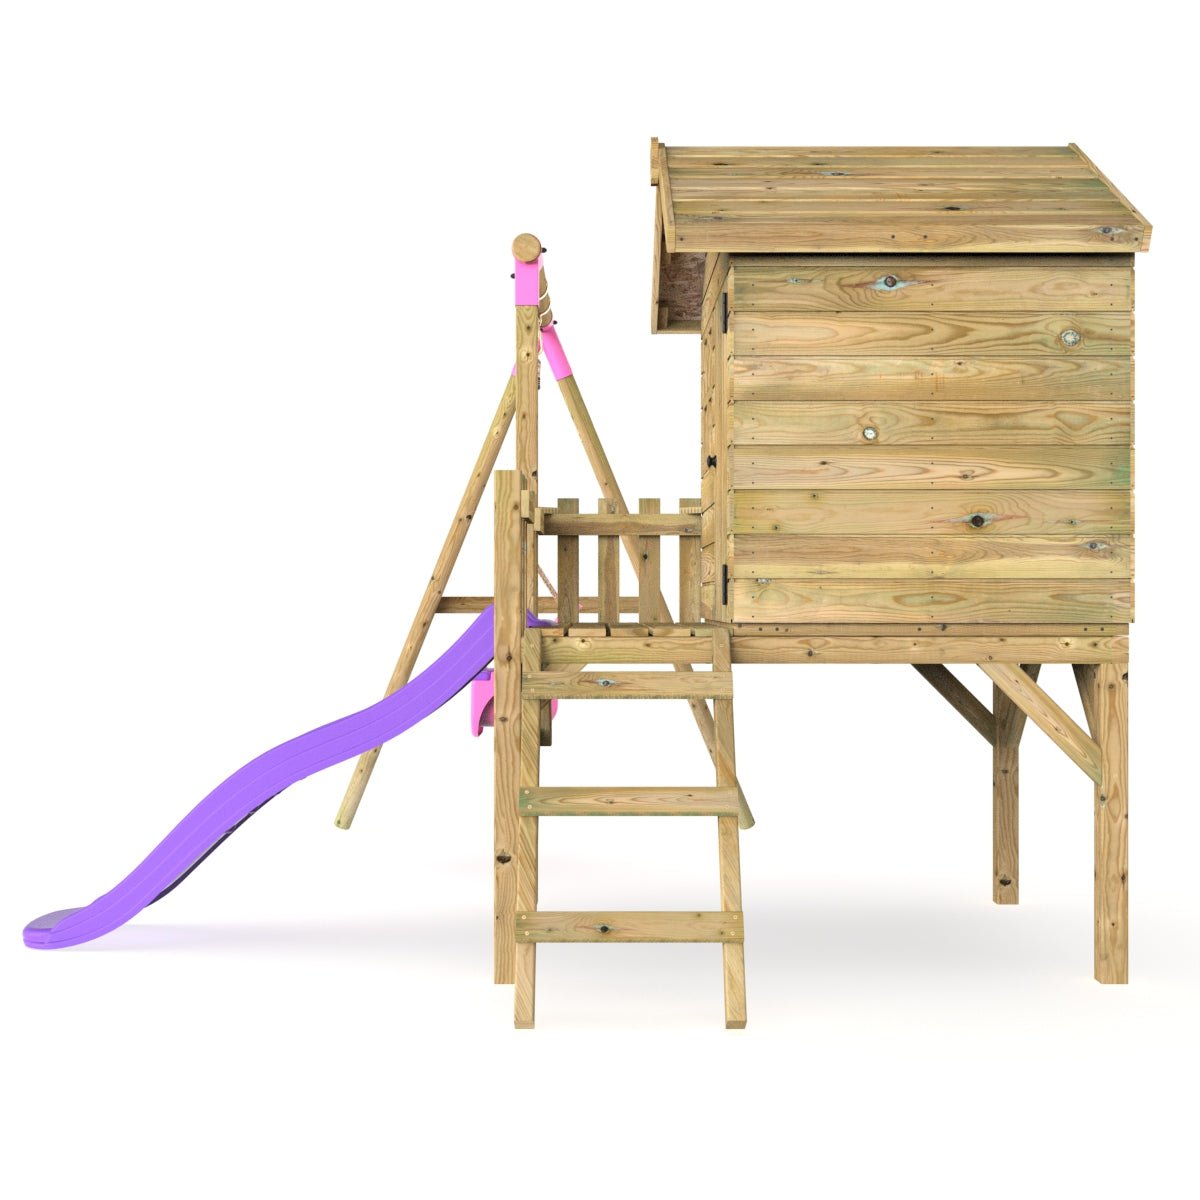 Rebo Orchard 4FT x 4FT Wooden Playhouse + Swings, 900mm Deck & 6FT Slide - Pluto Purple